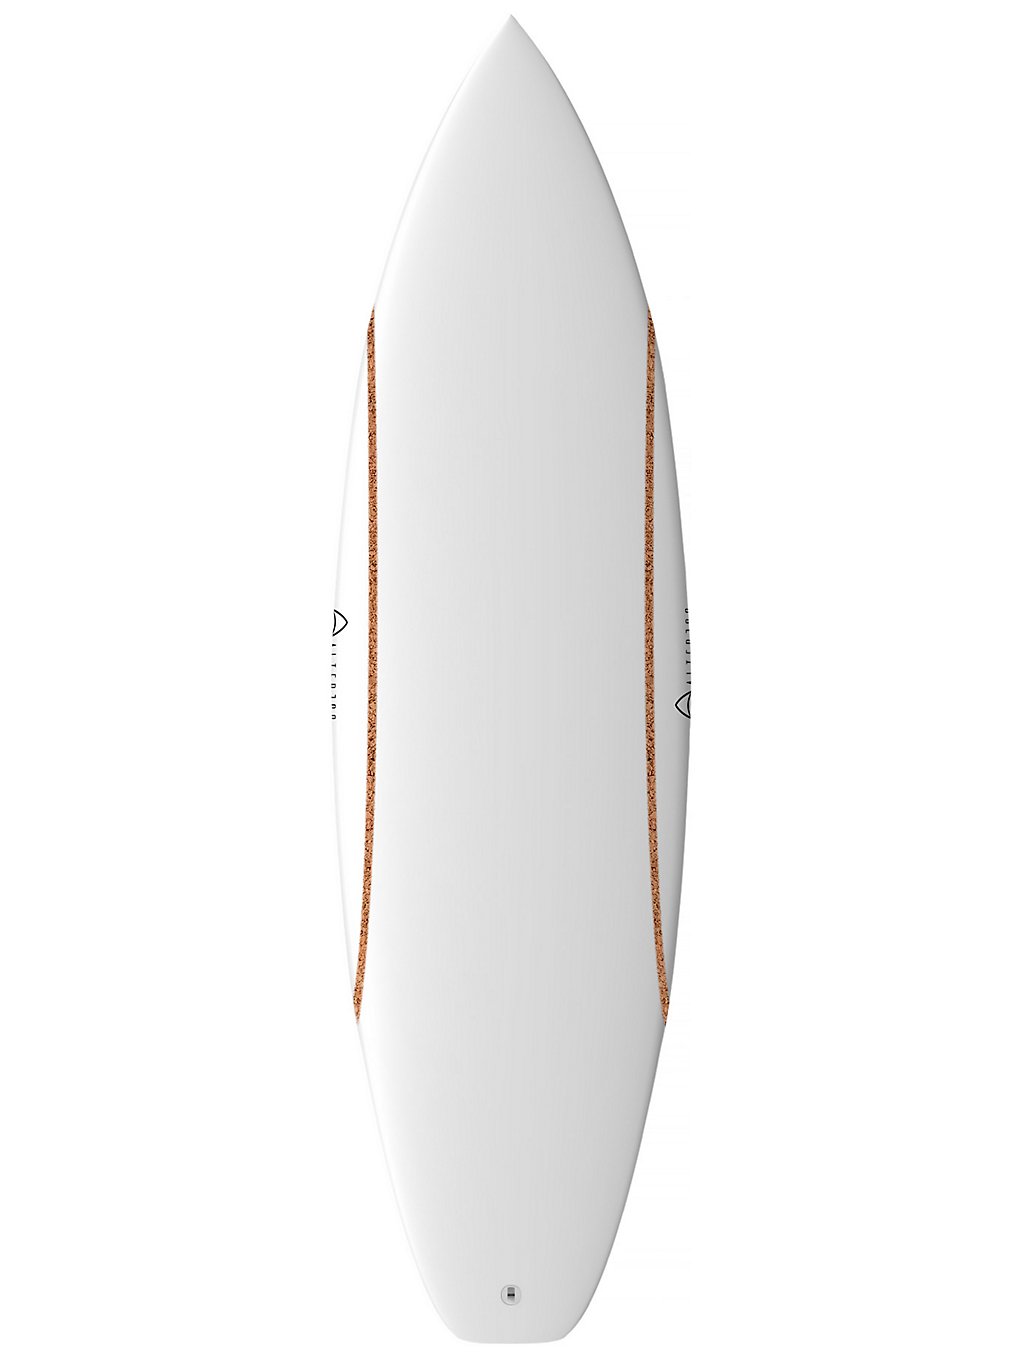 Alterego Quill 5'8 Surfboard cork